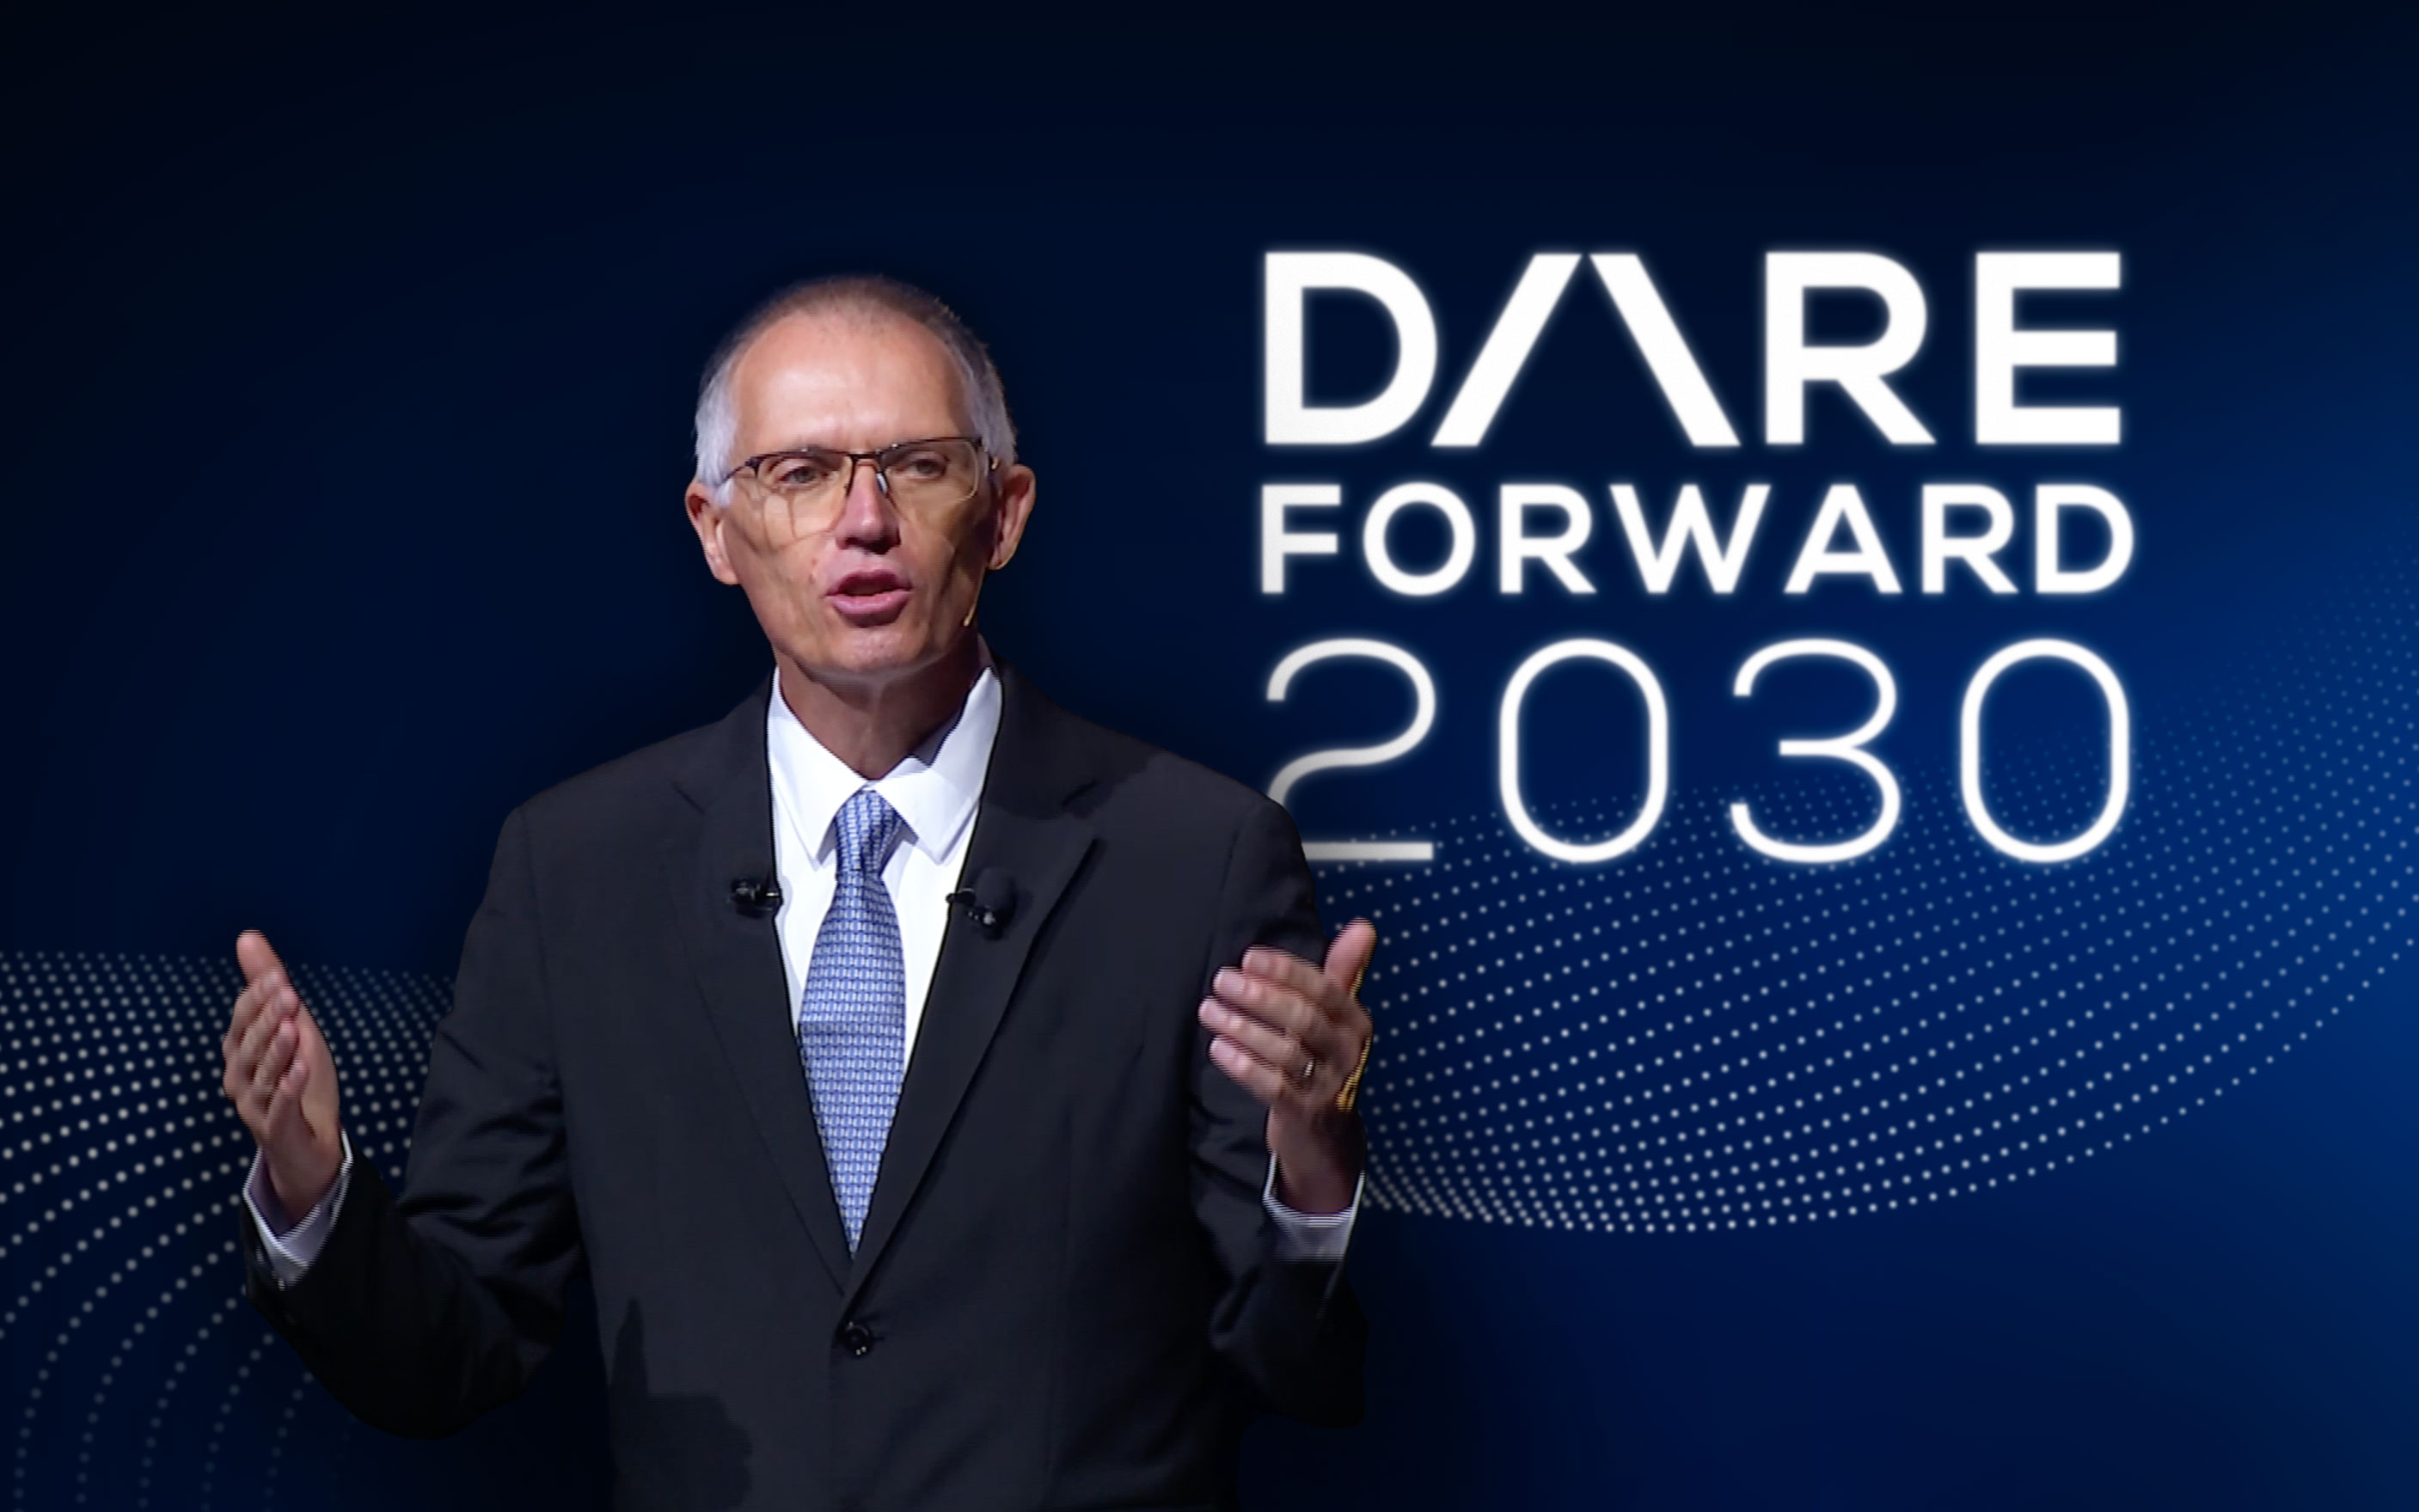 Image of Dare Forward 2030